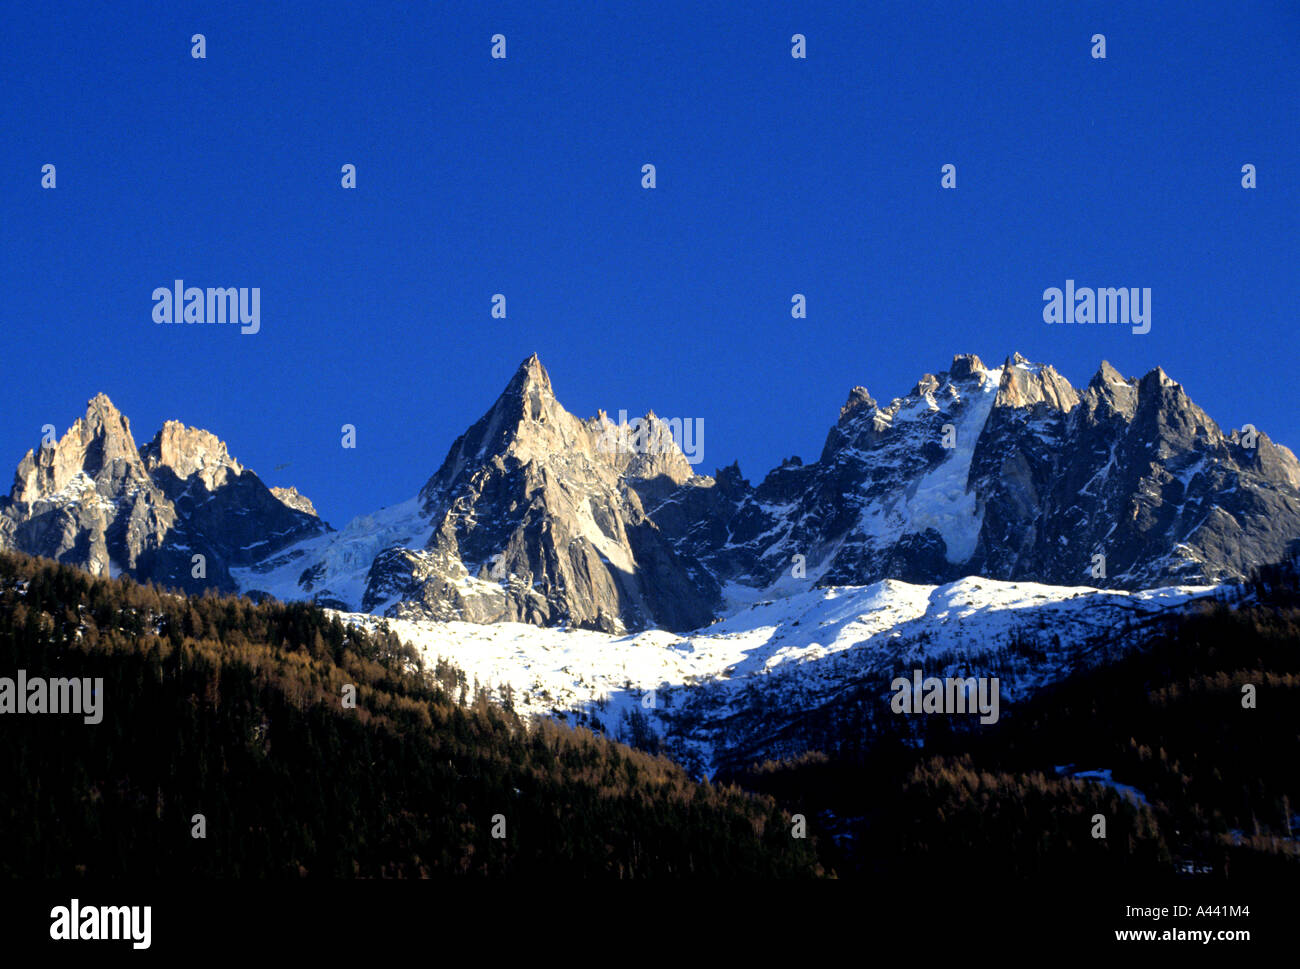 Snow alps Mont Blanc France French Mountain skiing Stock Photo